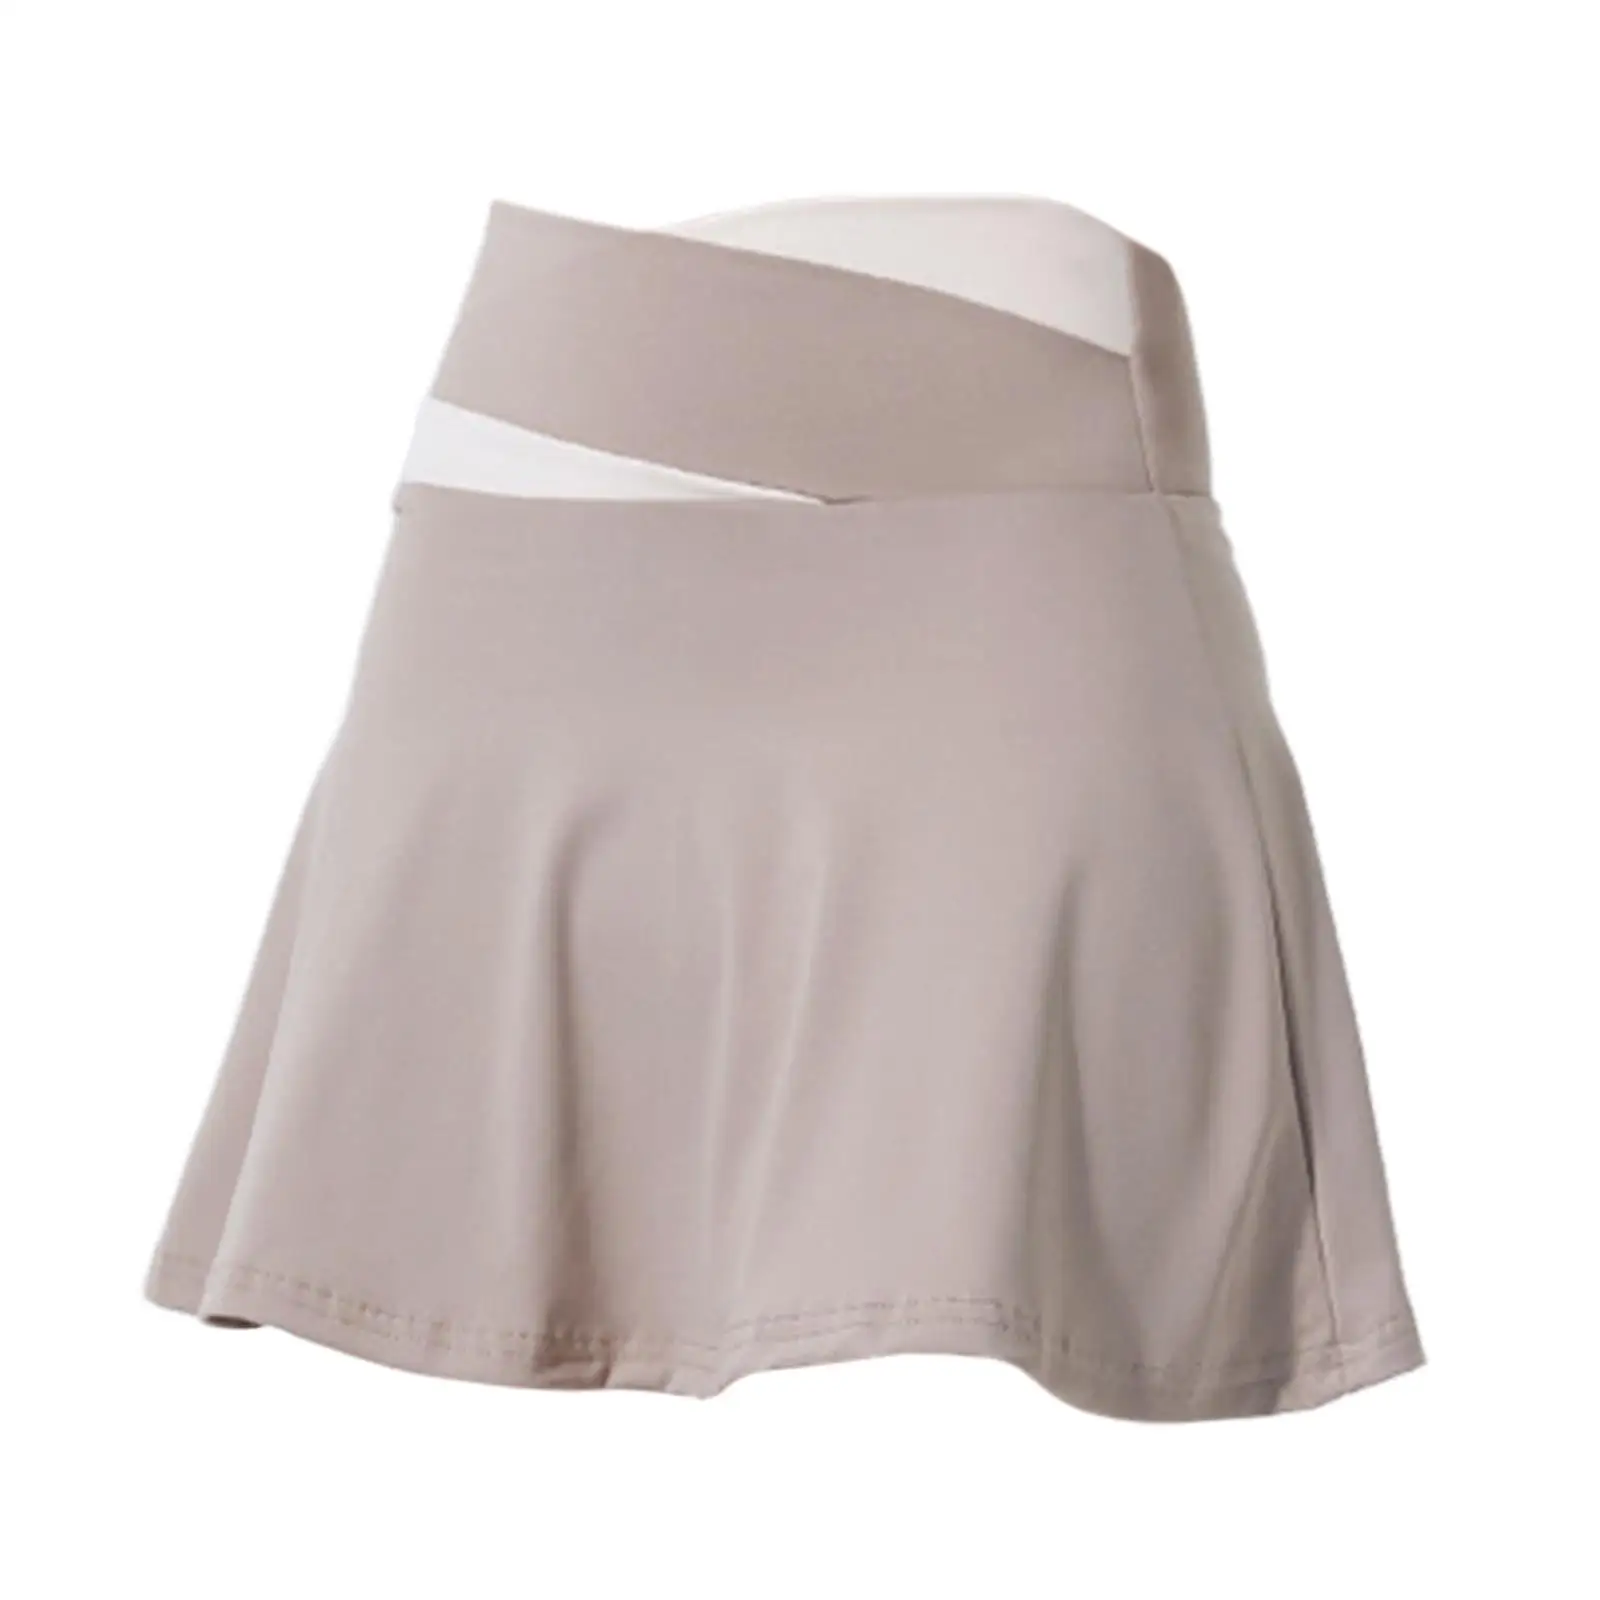 Tennis Skirts Short Skirt Athletic Comfortable Gymwear Women`s Culottes Skirt Badminton Skirt for Golf Running Yoga Tennis Home